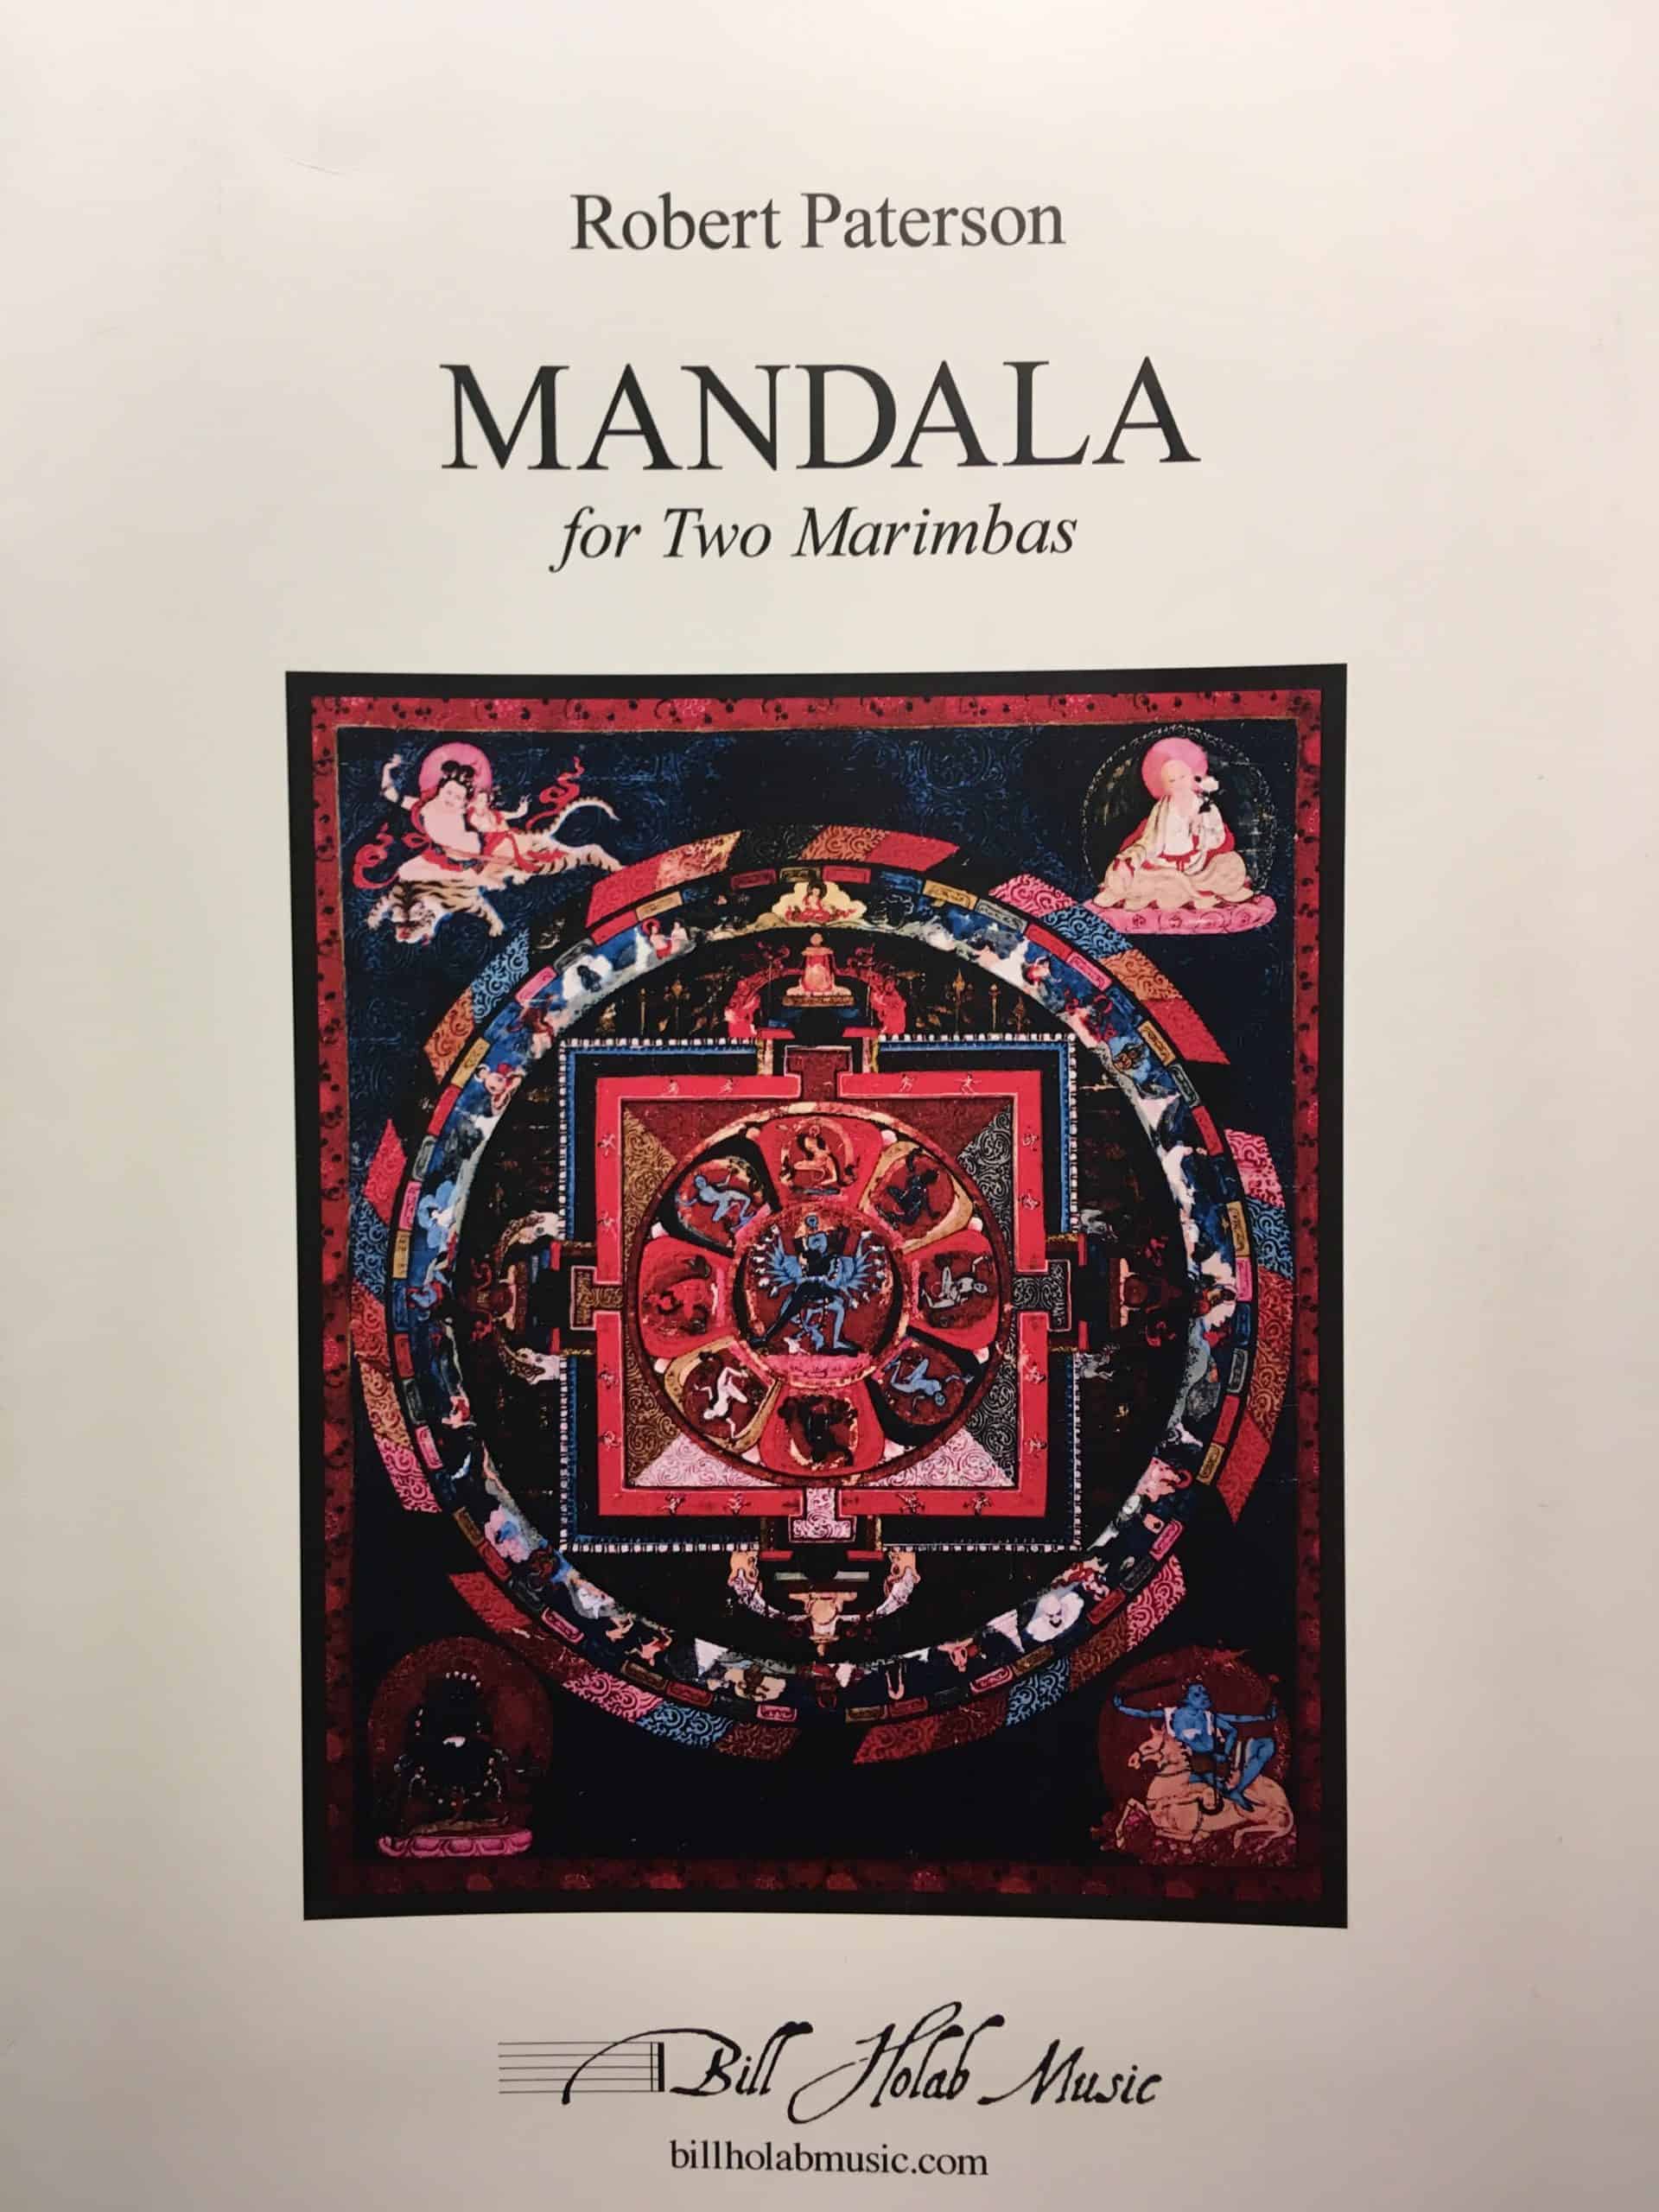 Mandala for two marimbas by Robert Paterson